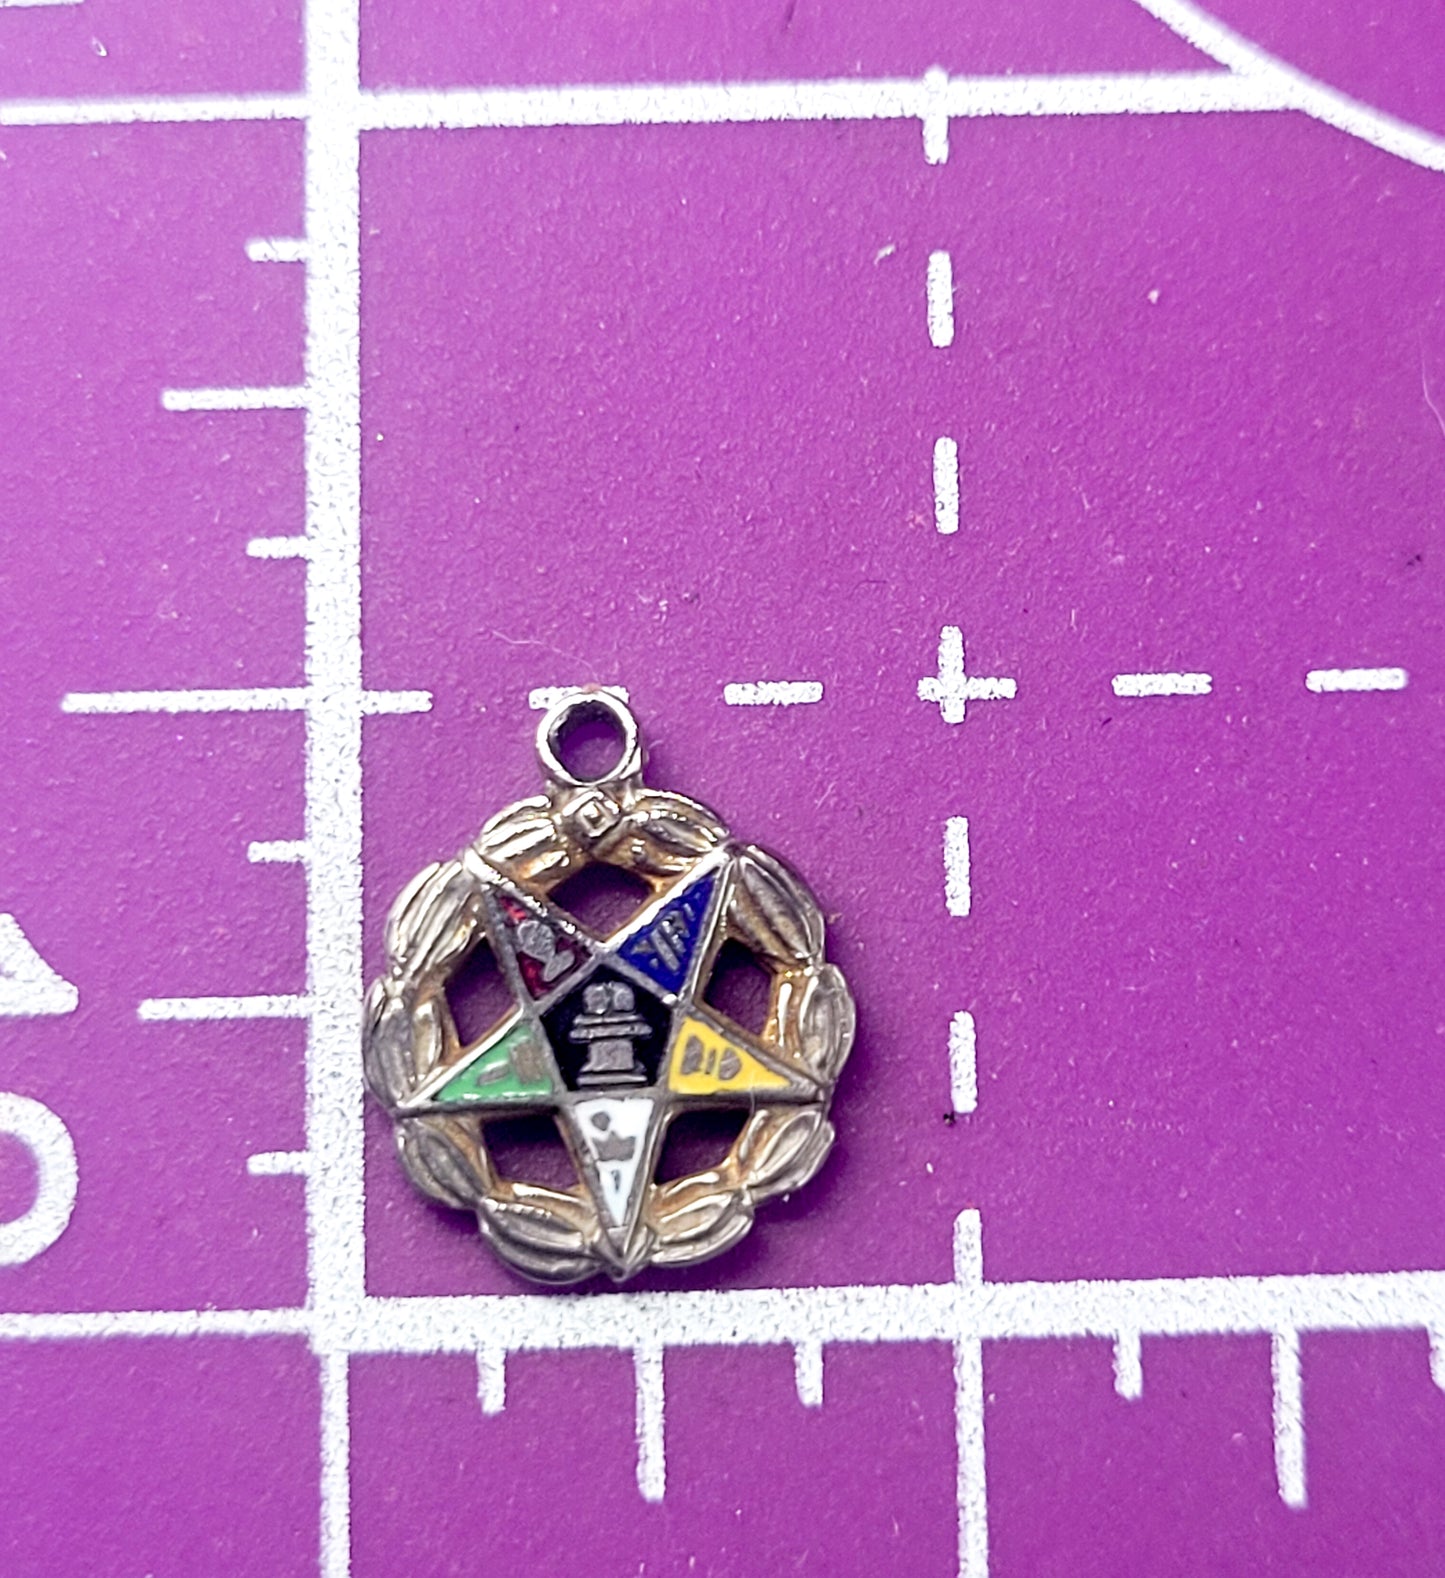 Order of the Eastern Star Masonic Fraternity enamel silver vintage charm